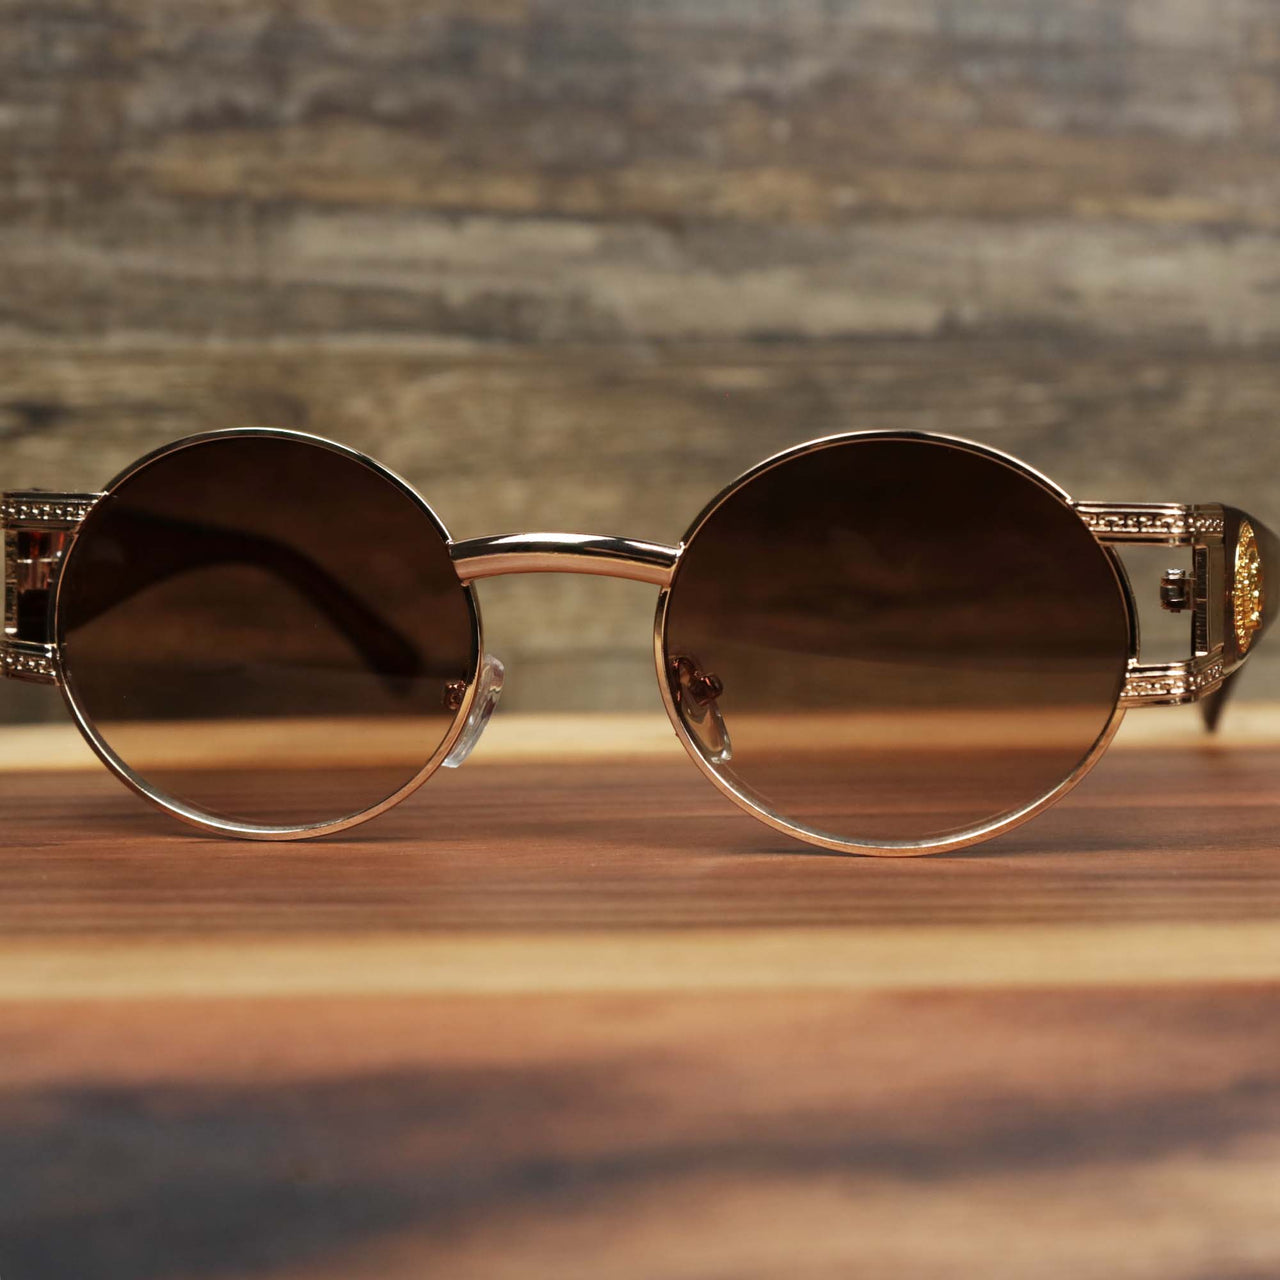 The Circle Frame Lion Head Emblem Brown Lens Sunglasses with Rose Gold Frame